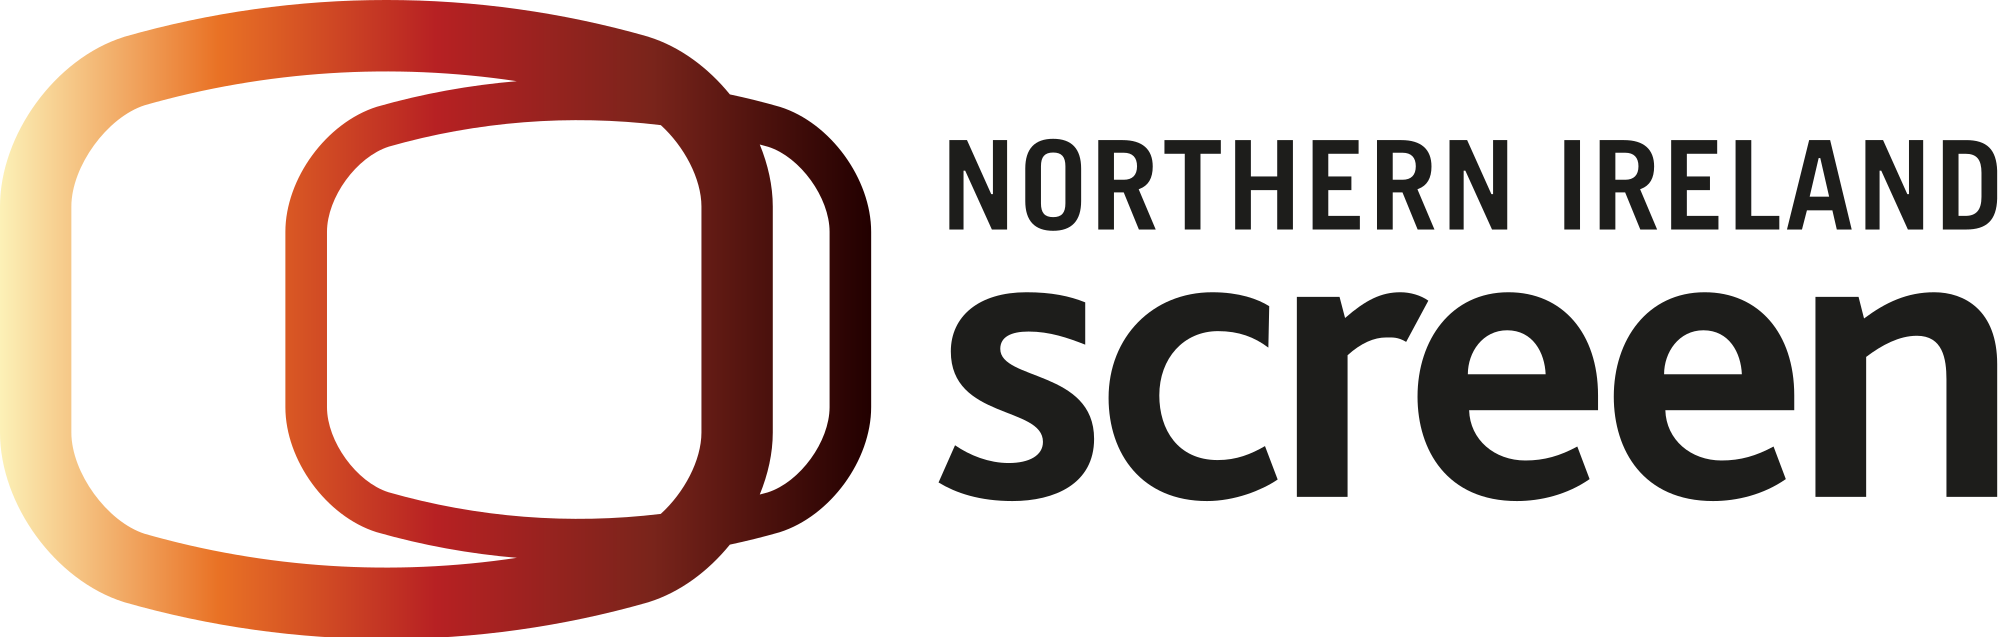 Northern Ireland Screen Logo